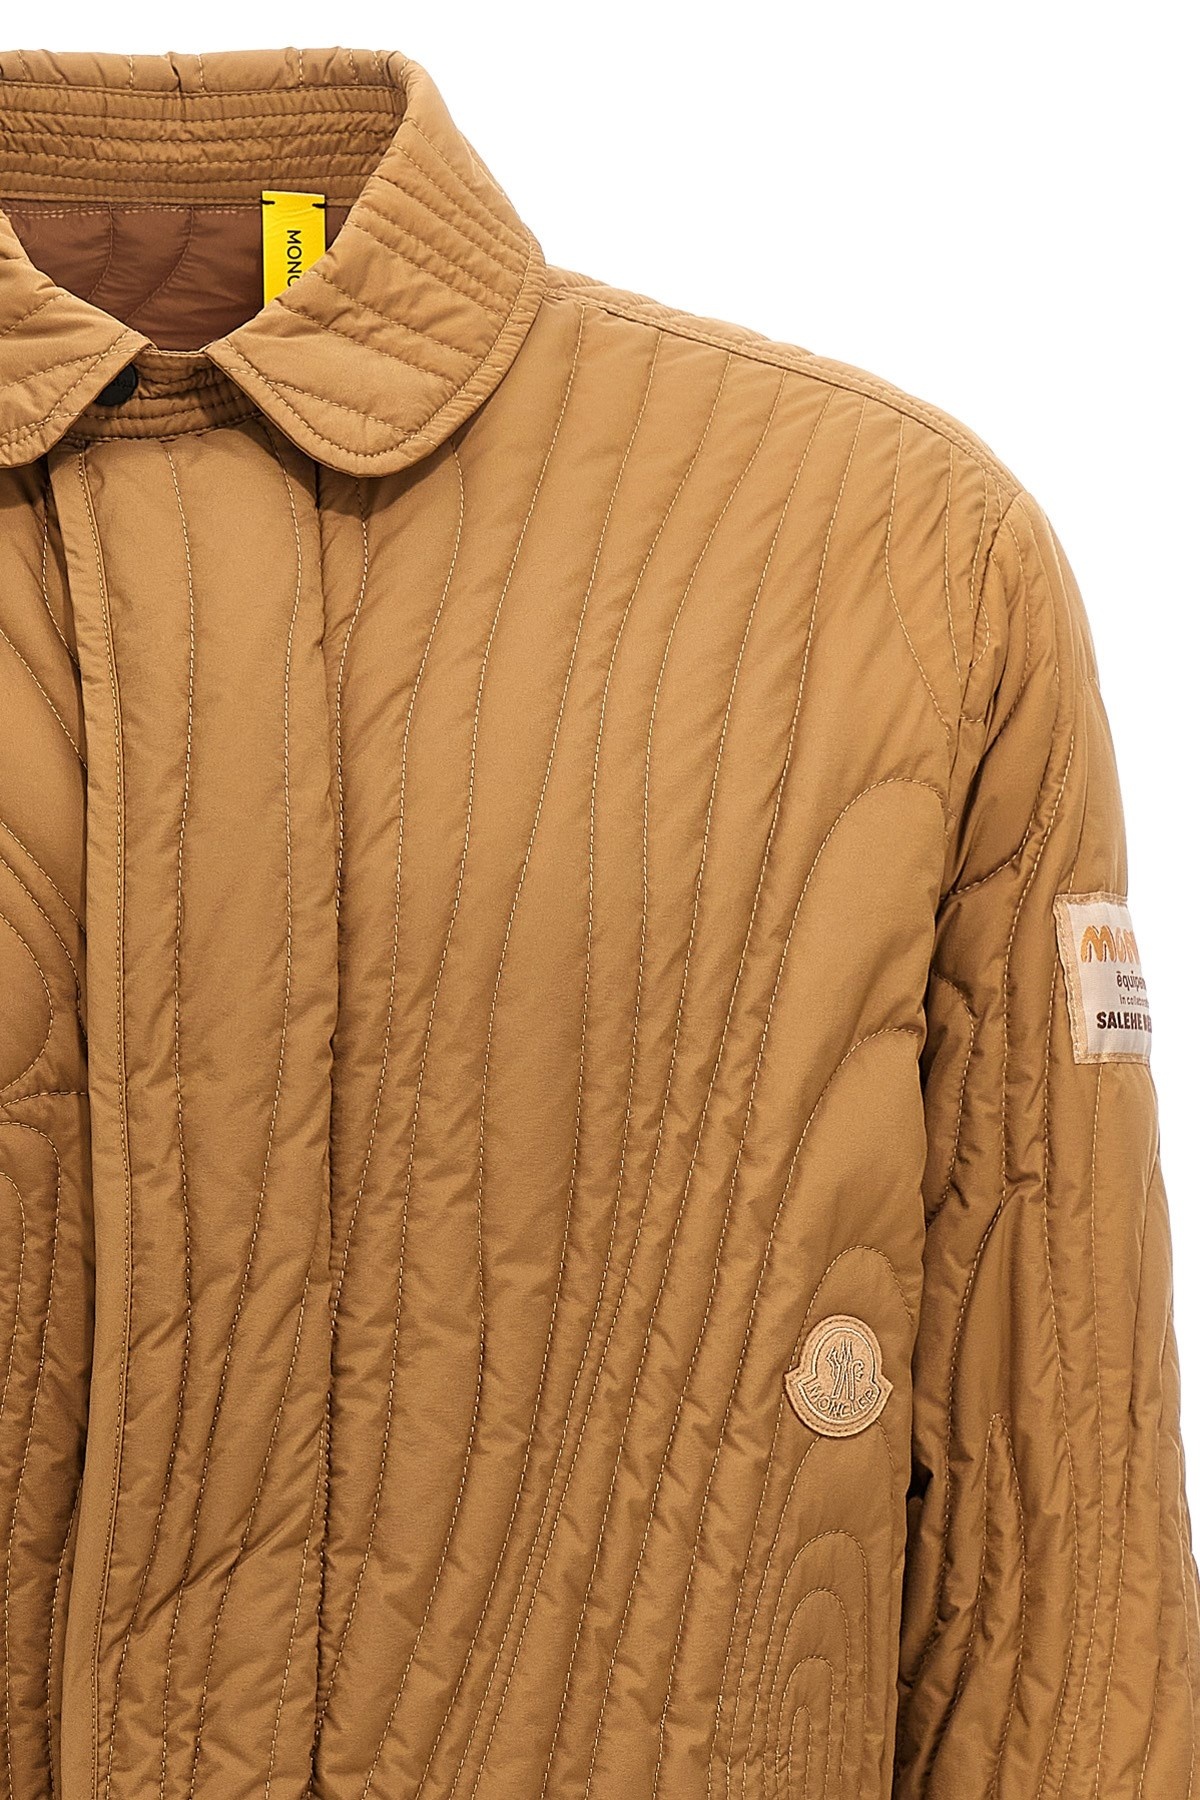 Moncler Genius x Salehe Bembury 'Harter' jacket - 3